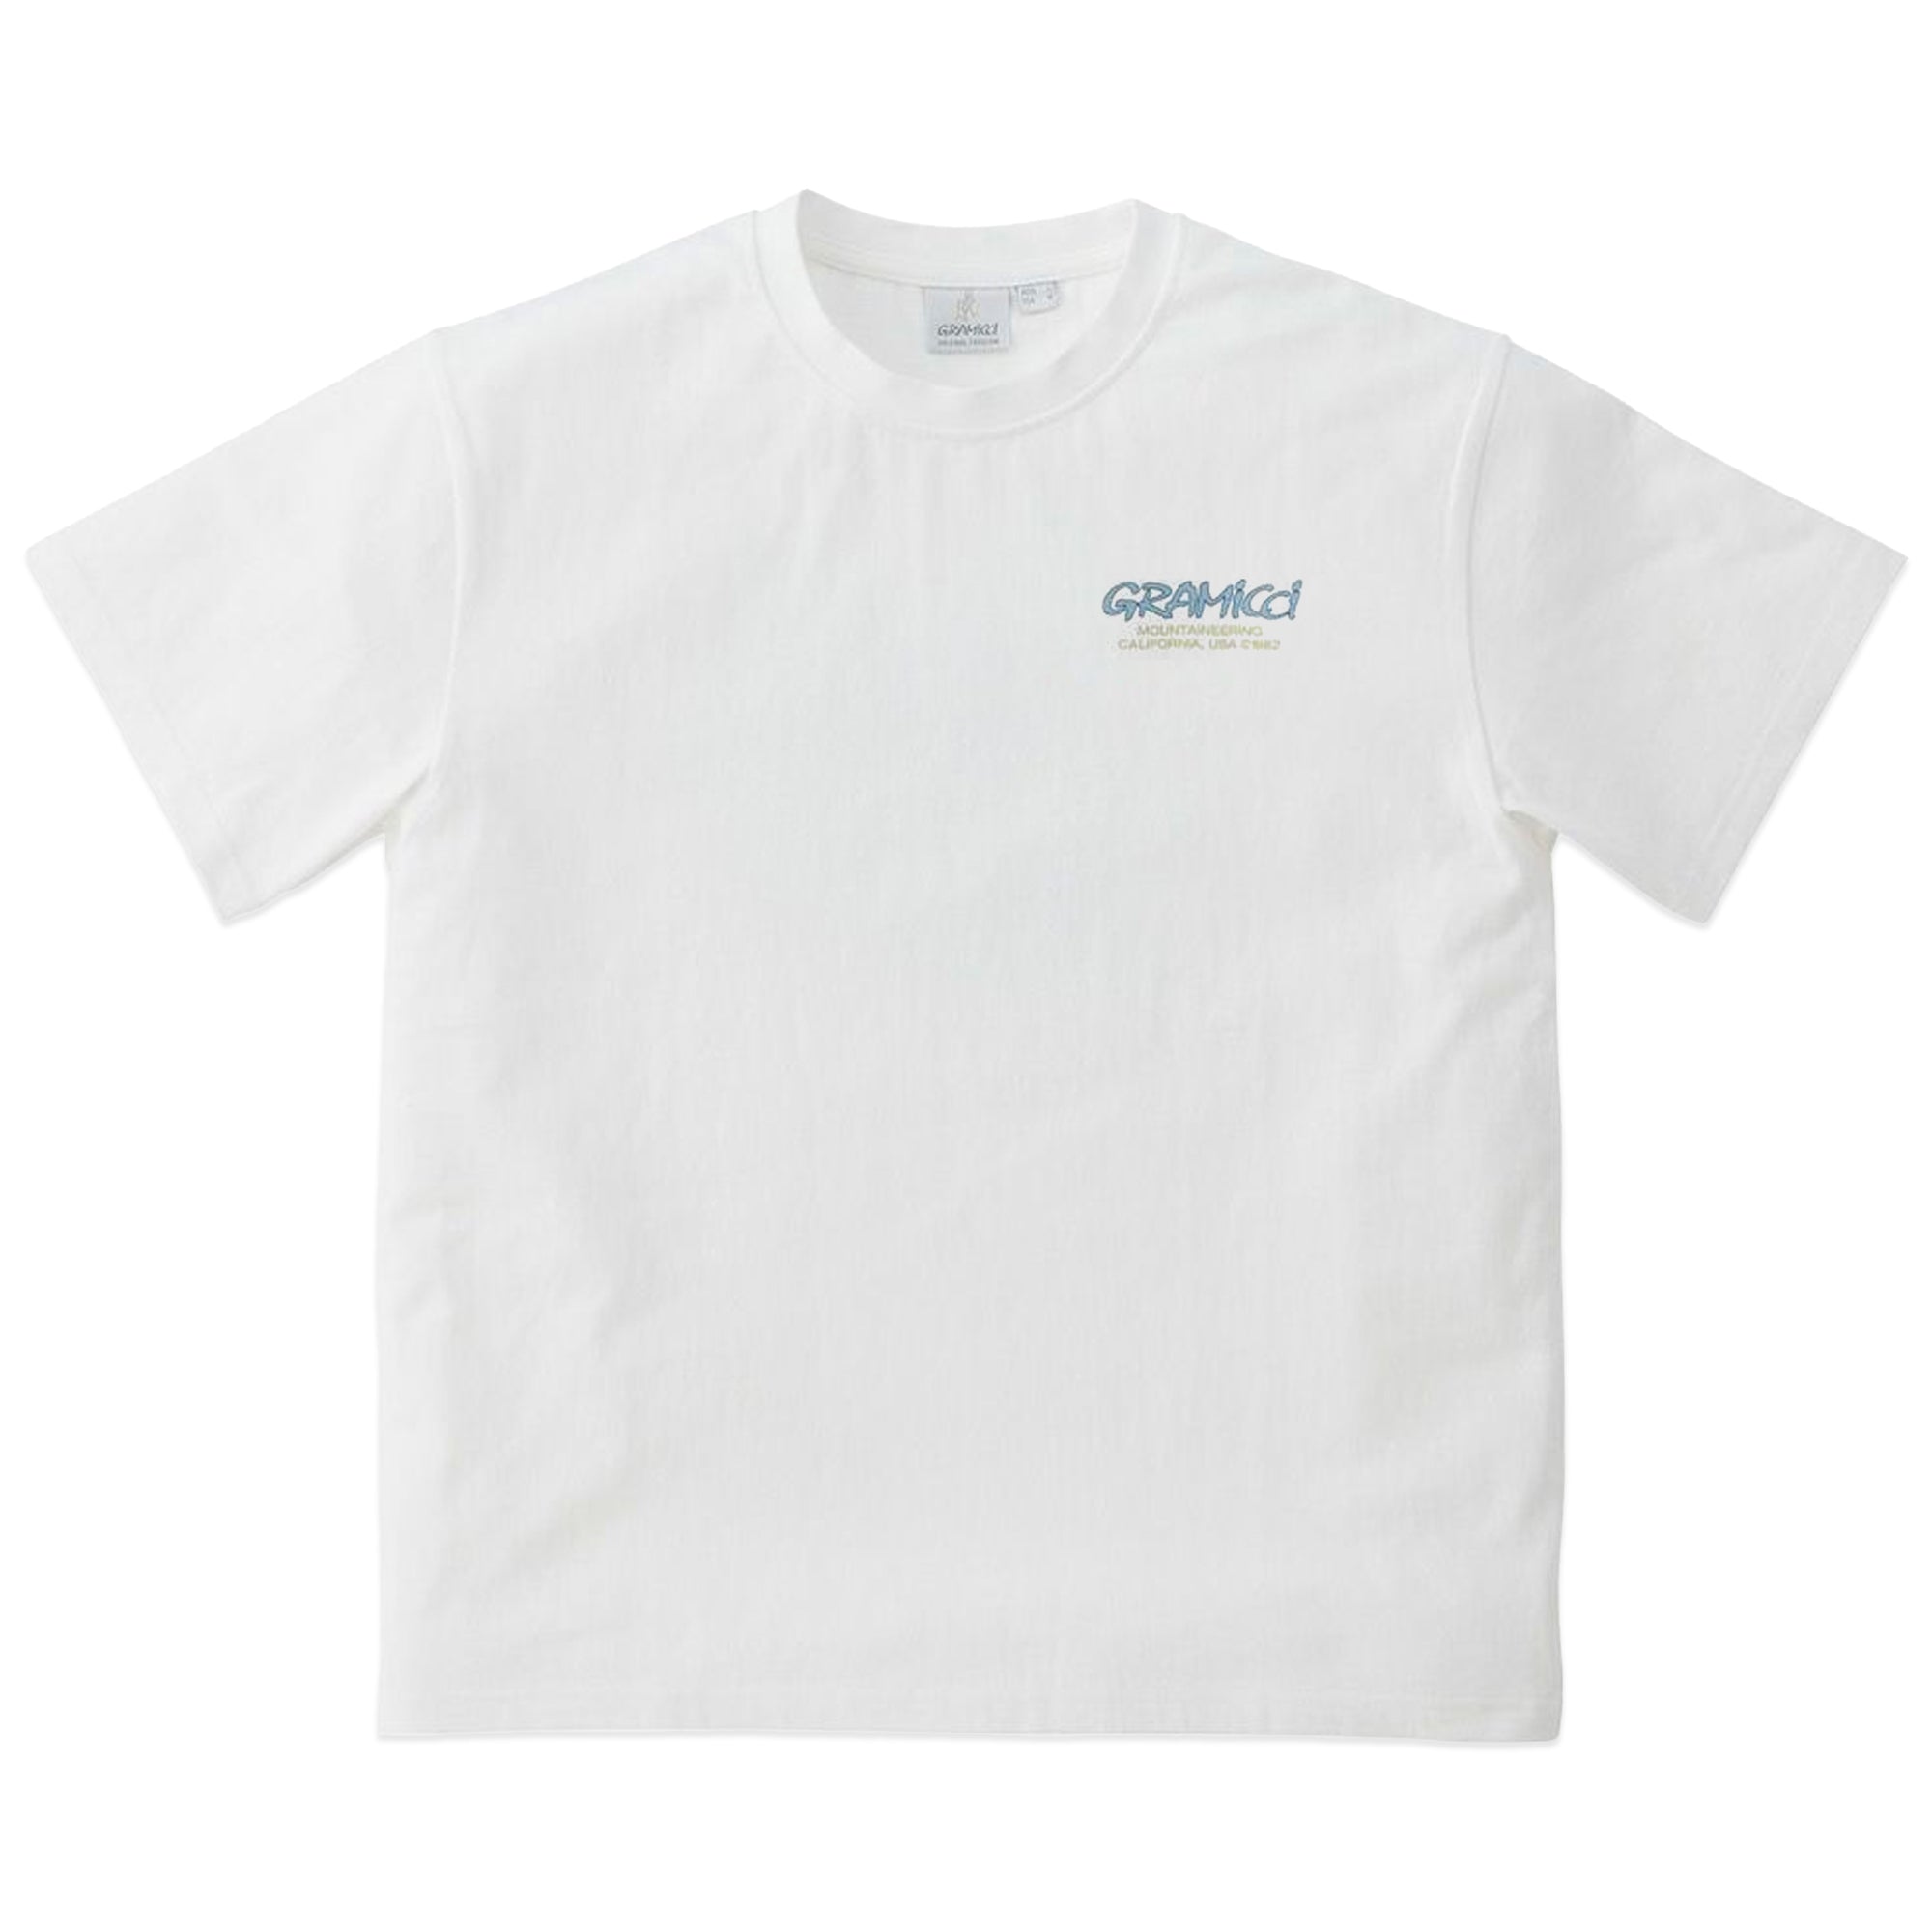 Gramicci Mountaineering T-Shirt - White